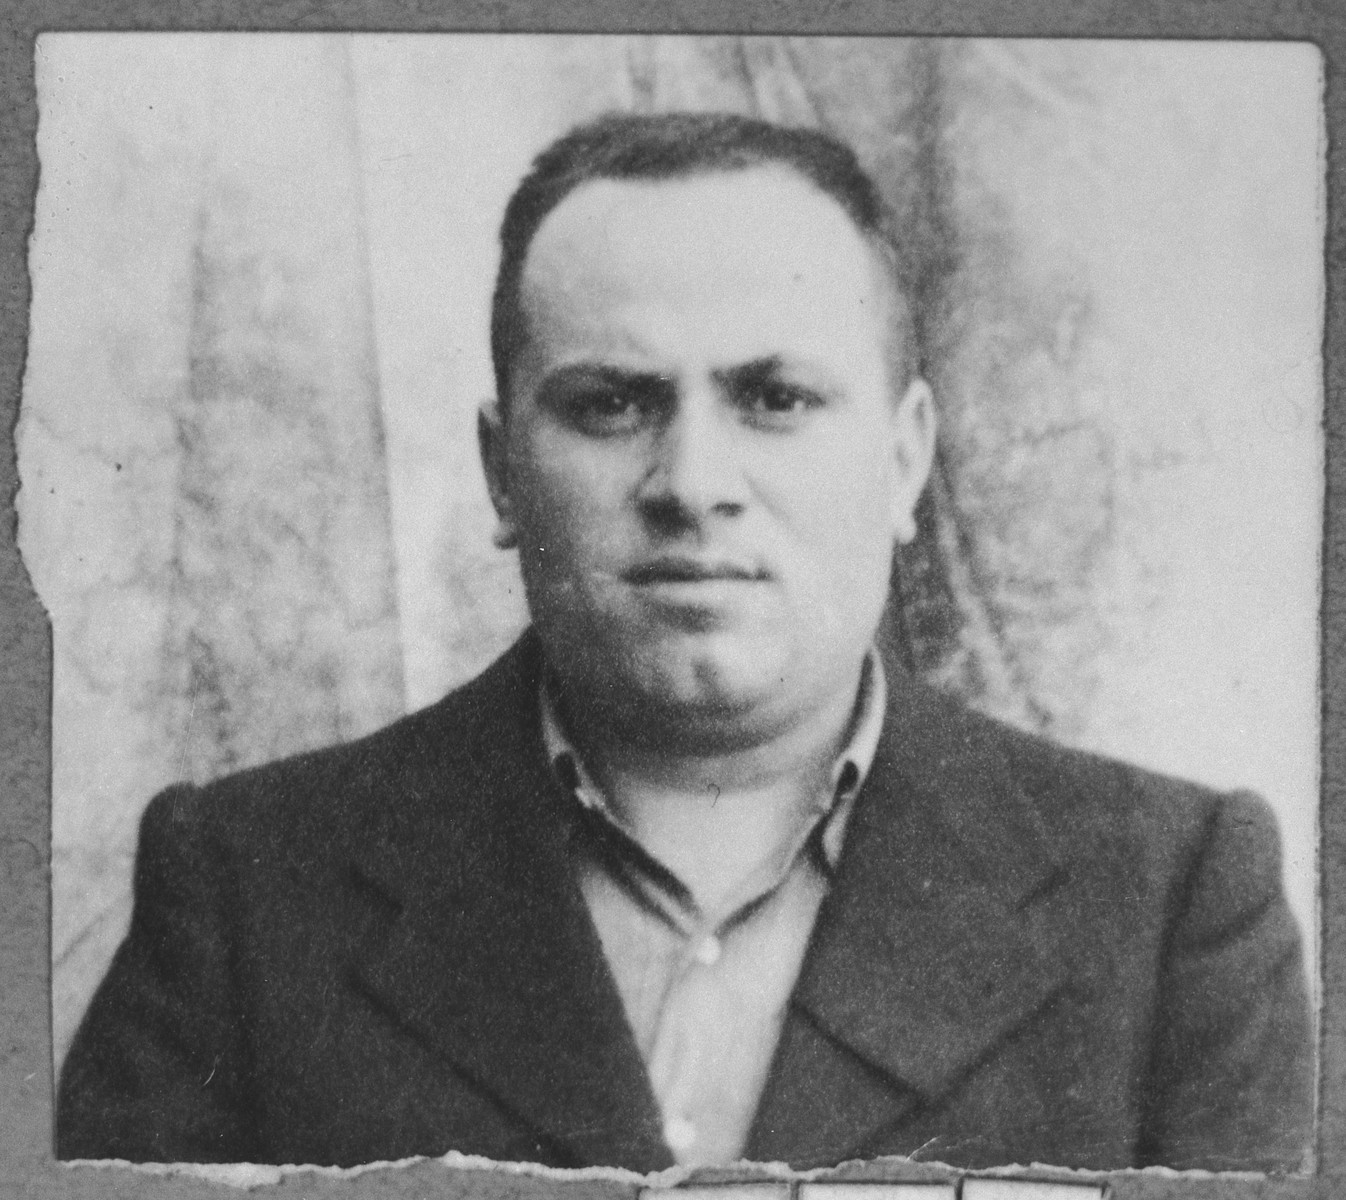 Portrait of Mordo (Mordechai) Russo, son of Isak Russo.  He lived at Ferizovatska 30 in Bitola.